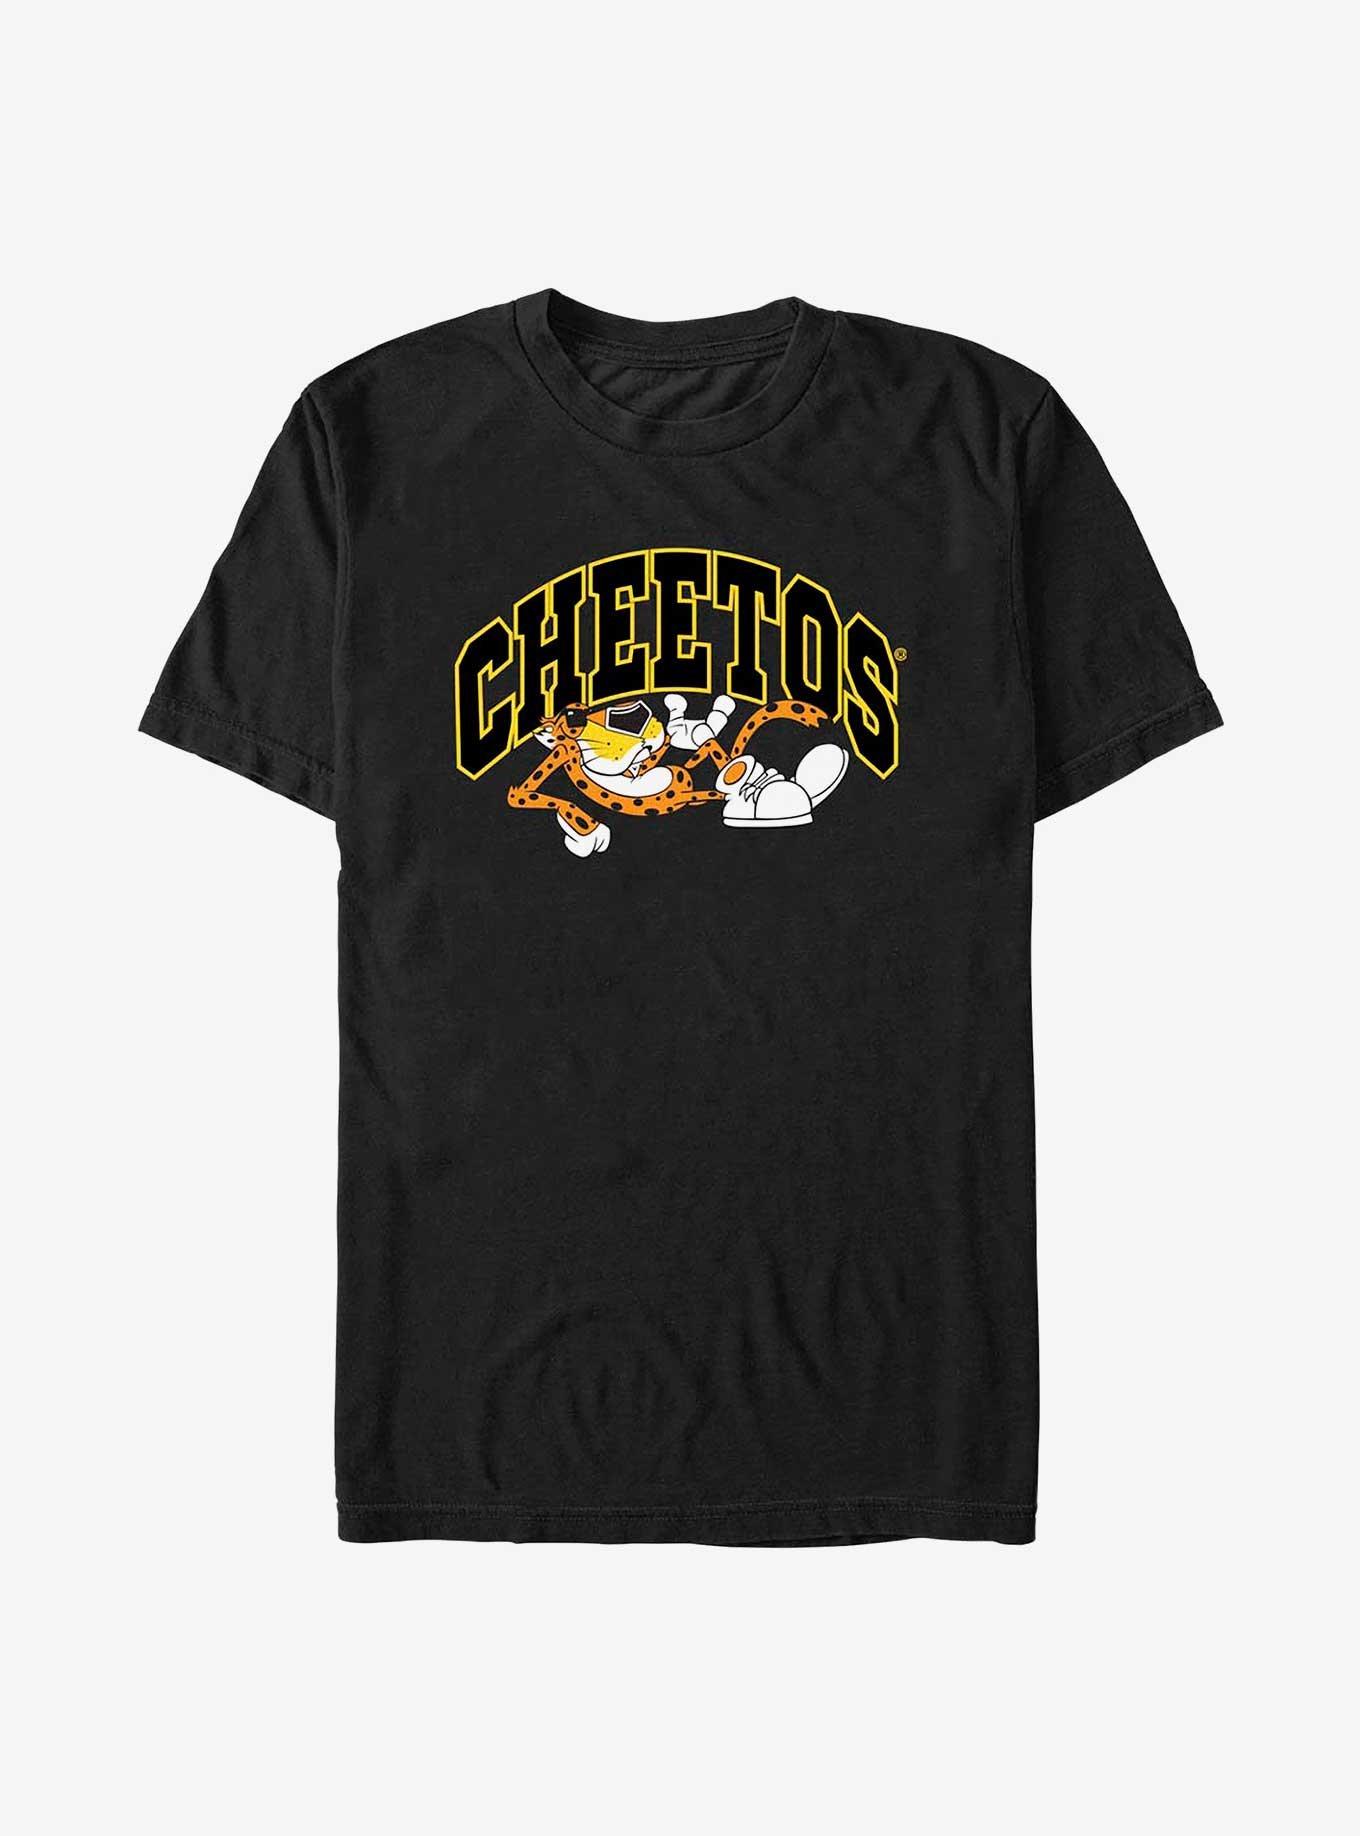 Cheetos Varsity T-Shirt